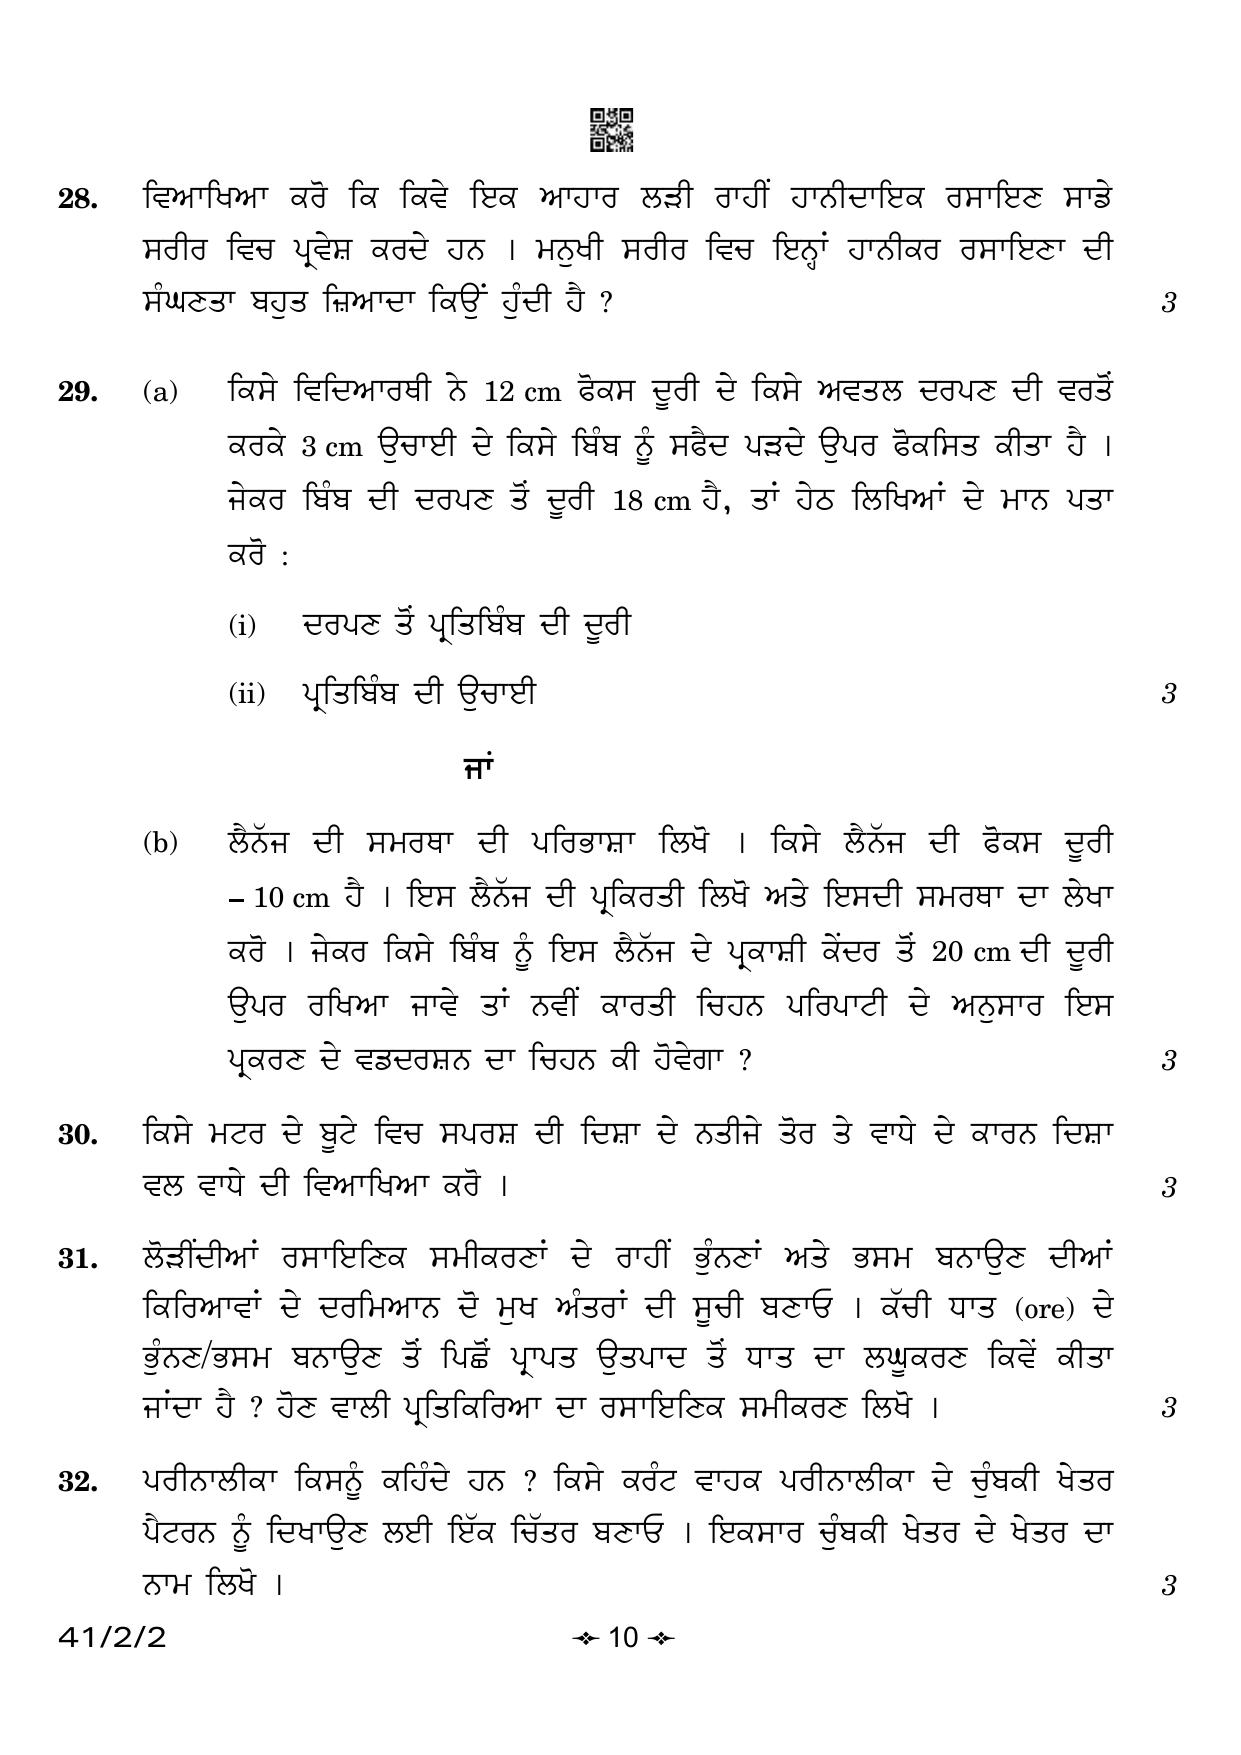 CBSE Class 10 41-2-2 Science Punjabi Version 2023 Question Paper - Page 10